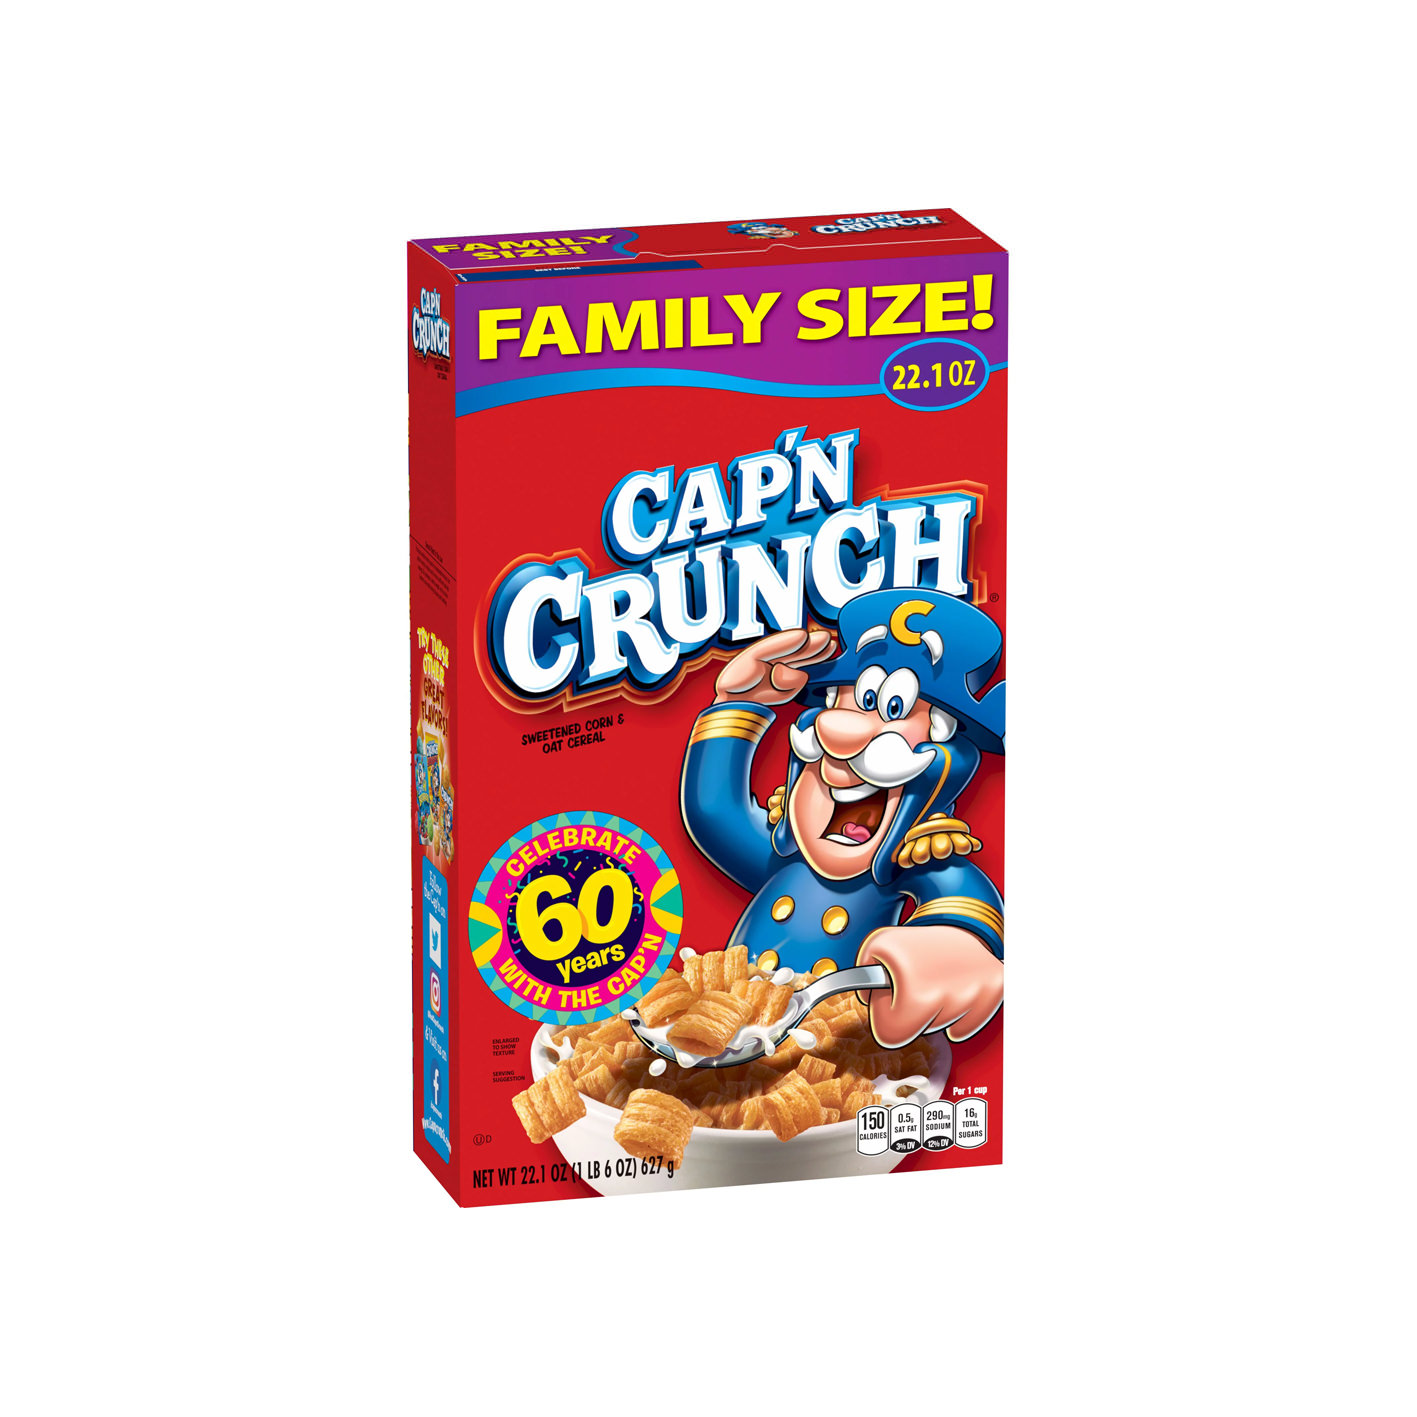 Cap’n Crunch Cereal Original Family Size Box, 22.1 oz